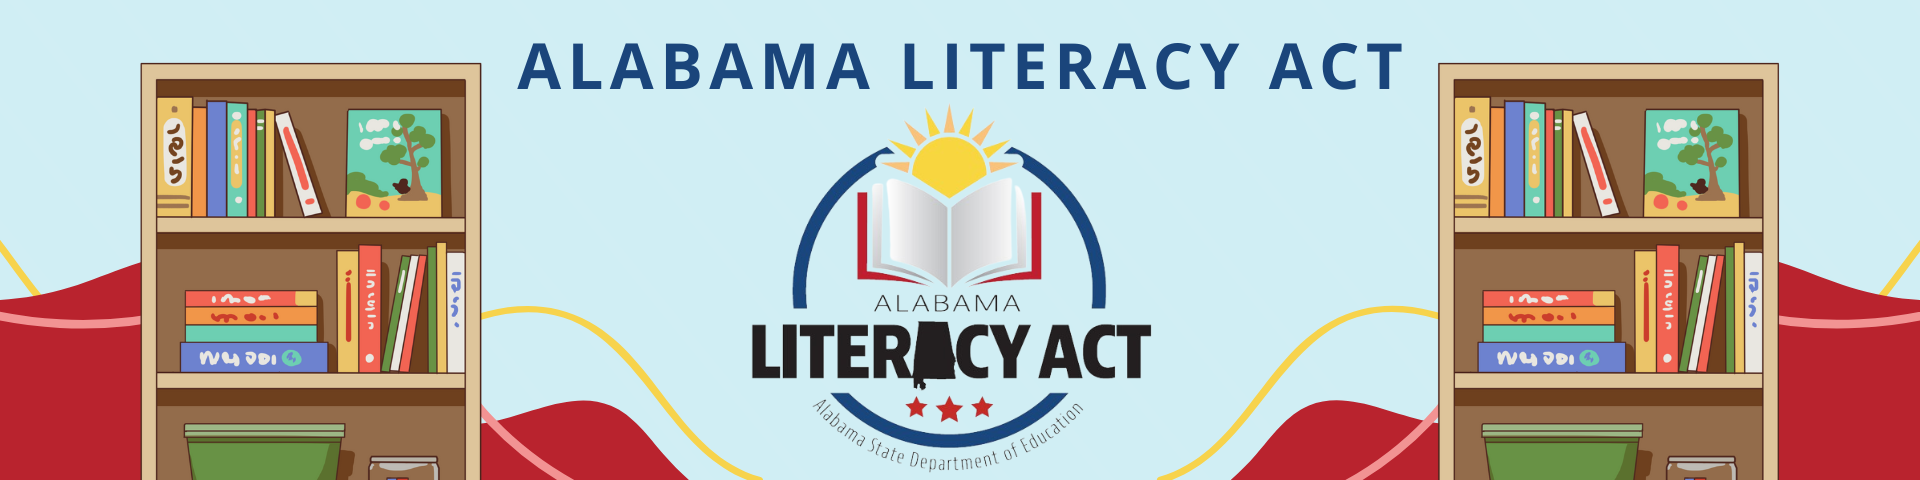 Alabama Literacy Act Logo